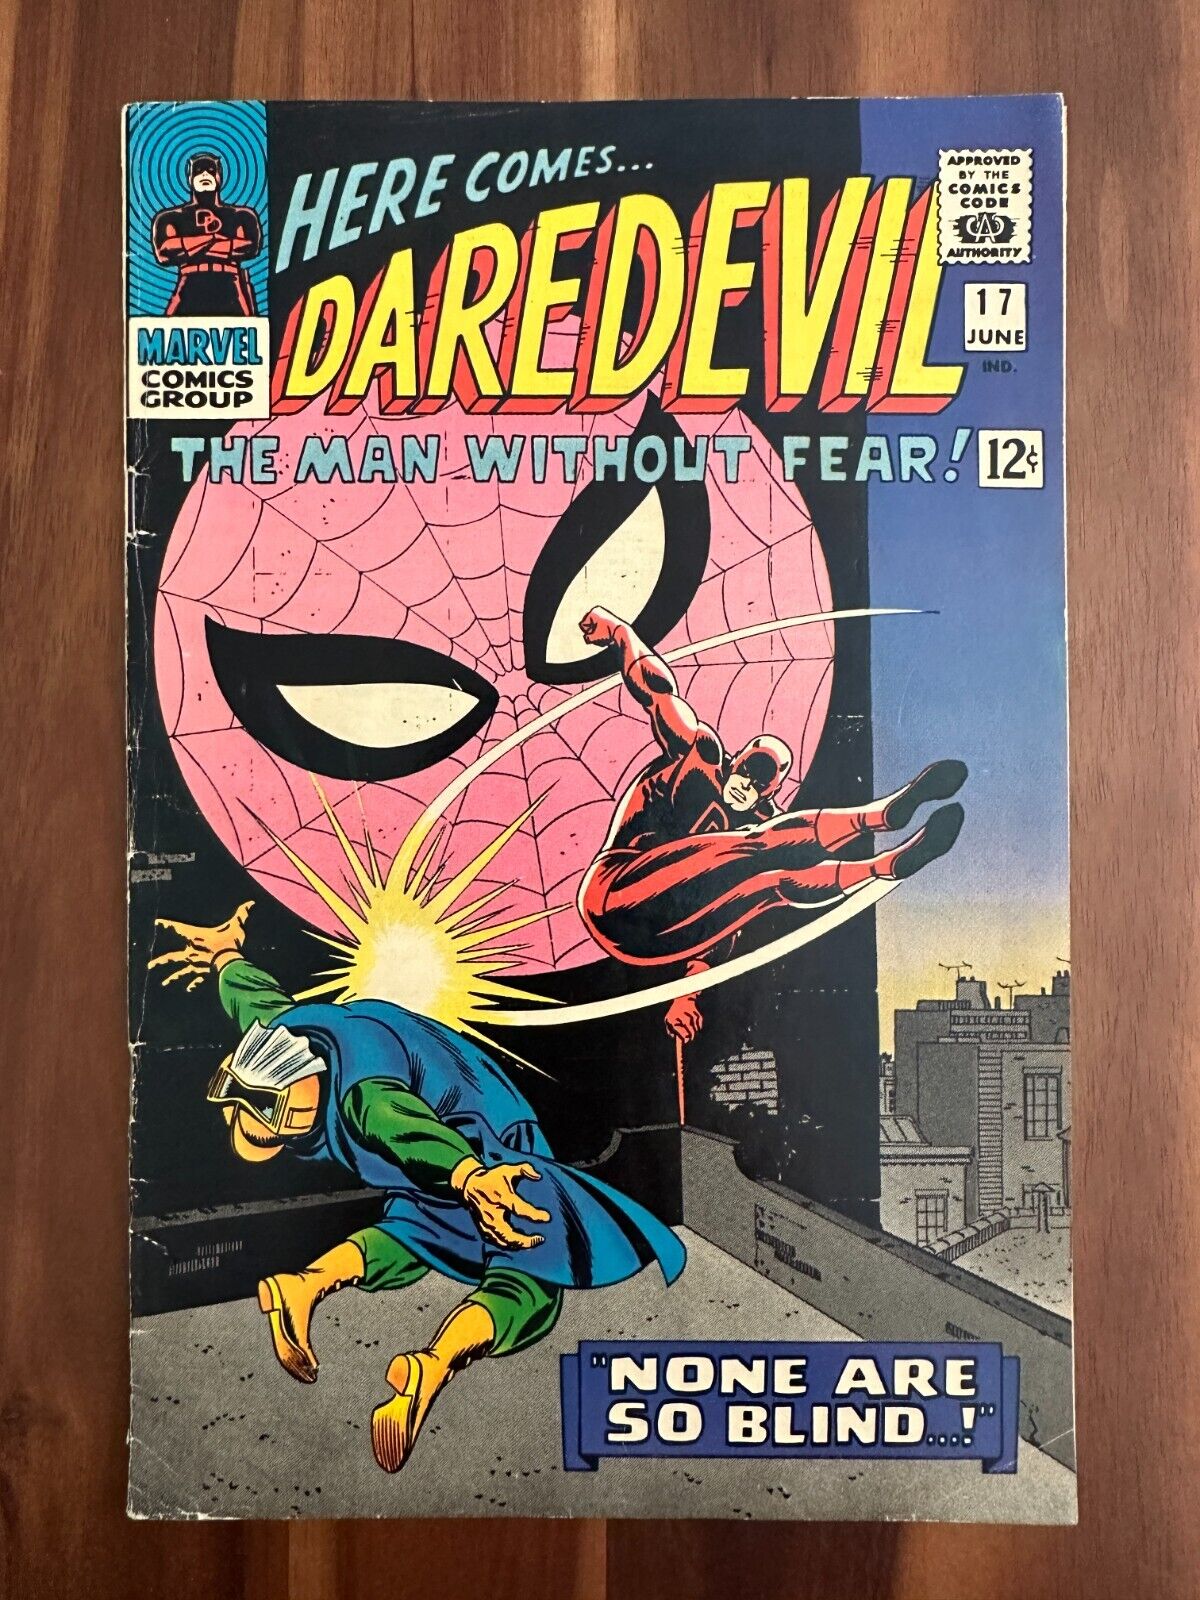 Daredevil #17 1966 Silver Age Marvel Comics Lee & Romita Amazing Spiderman app